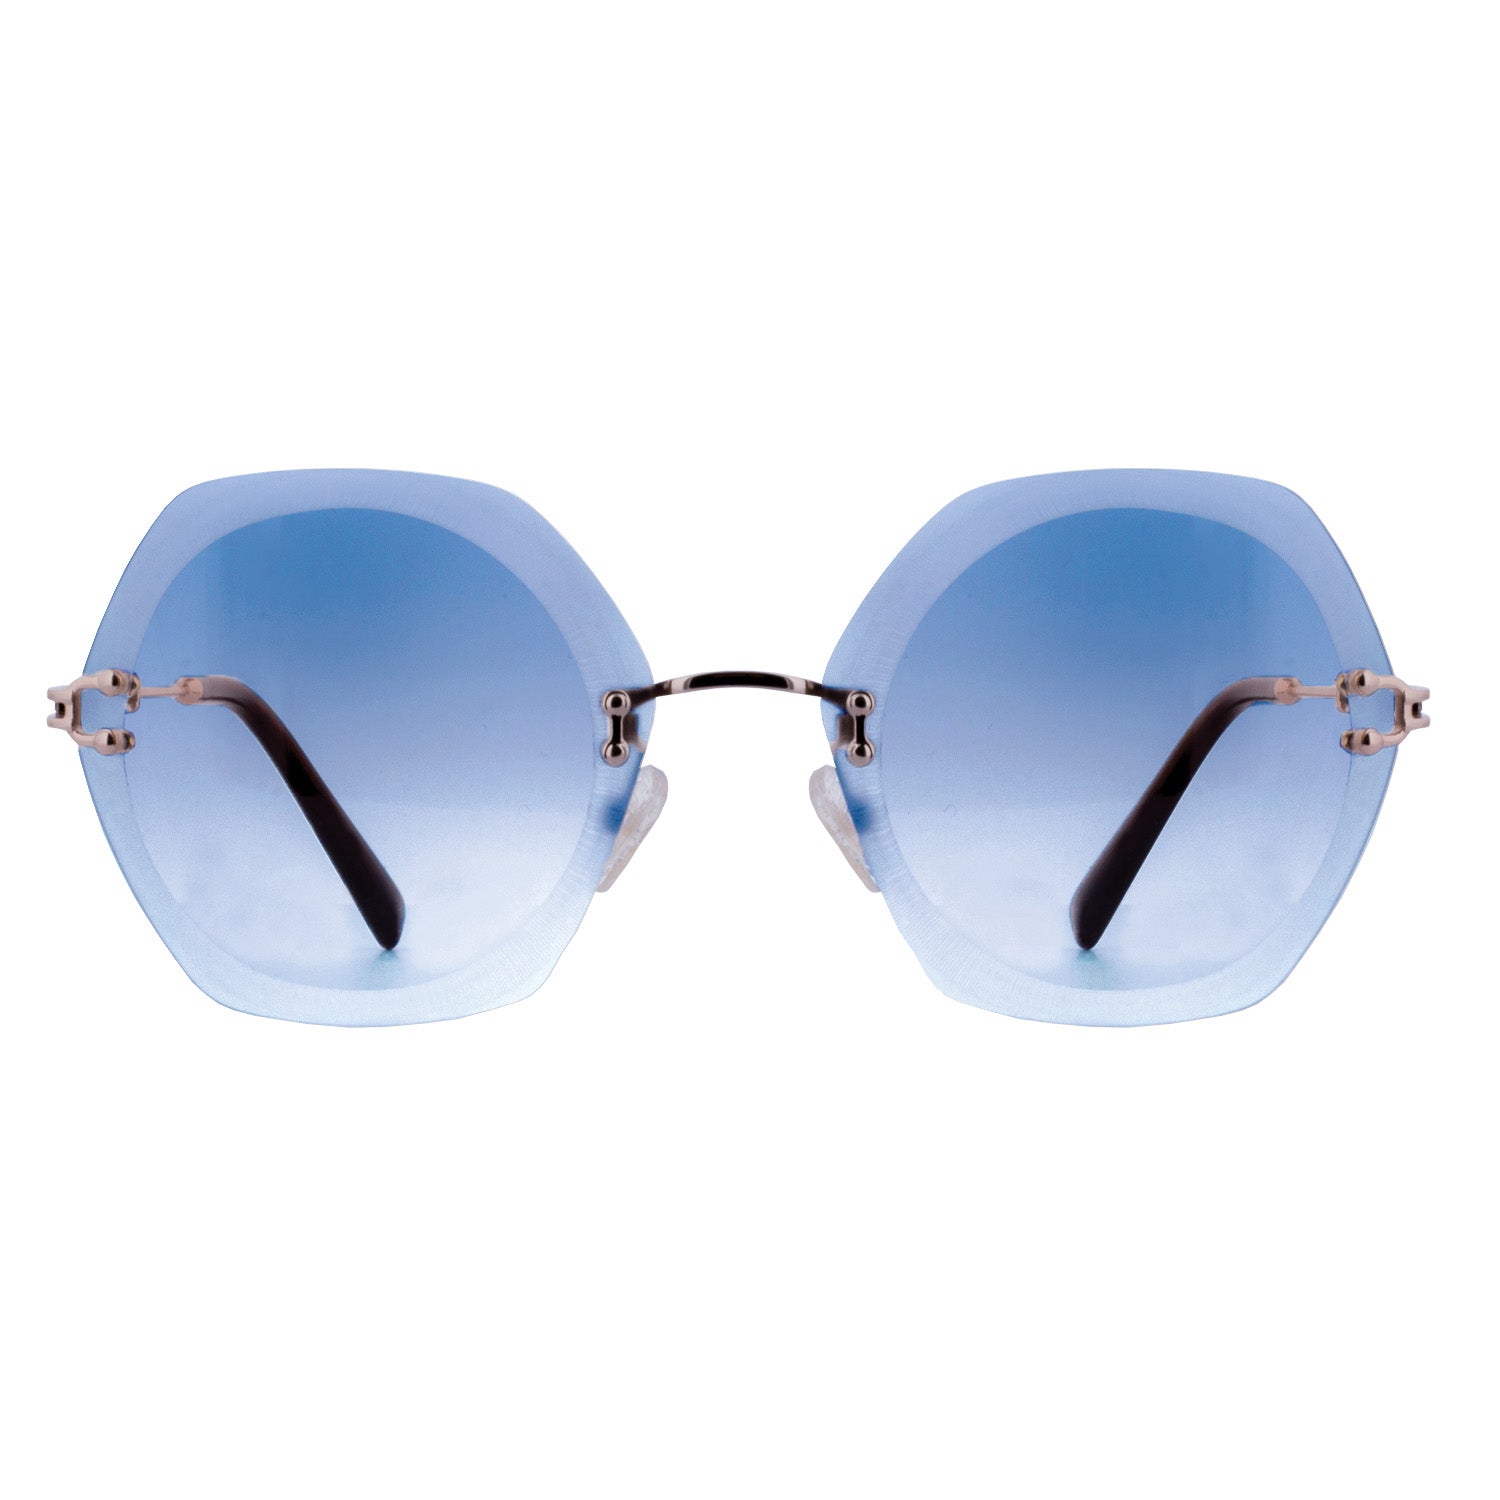 Mokki 90s Posh sunglasses in blue